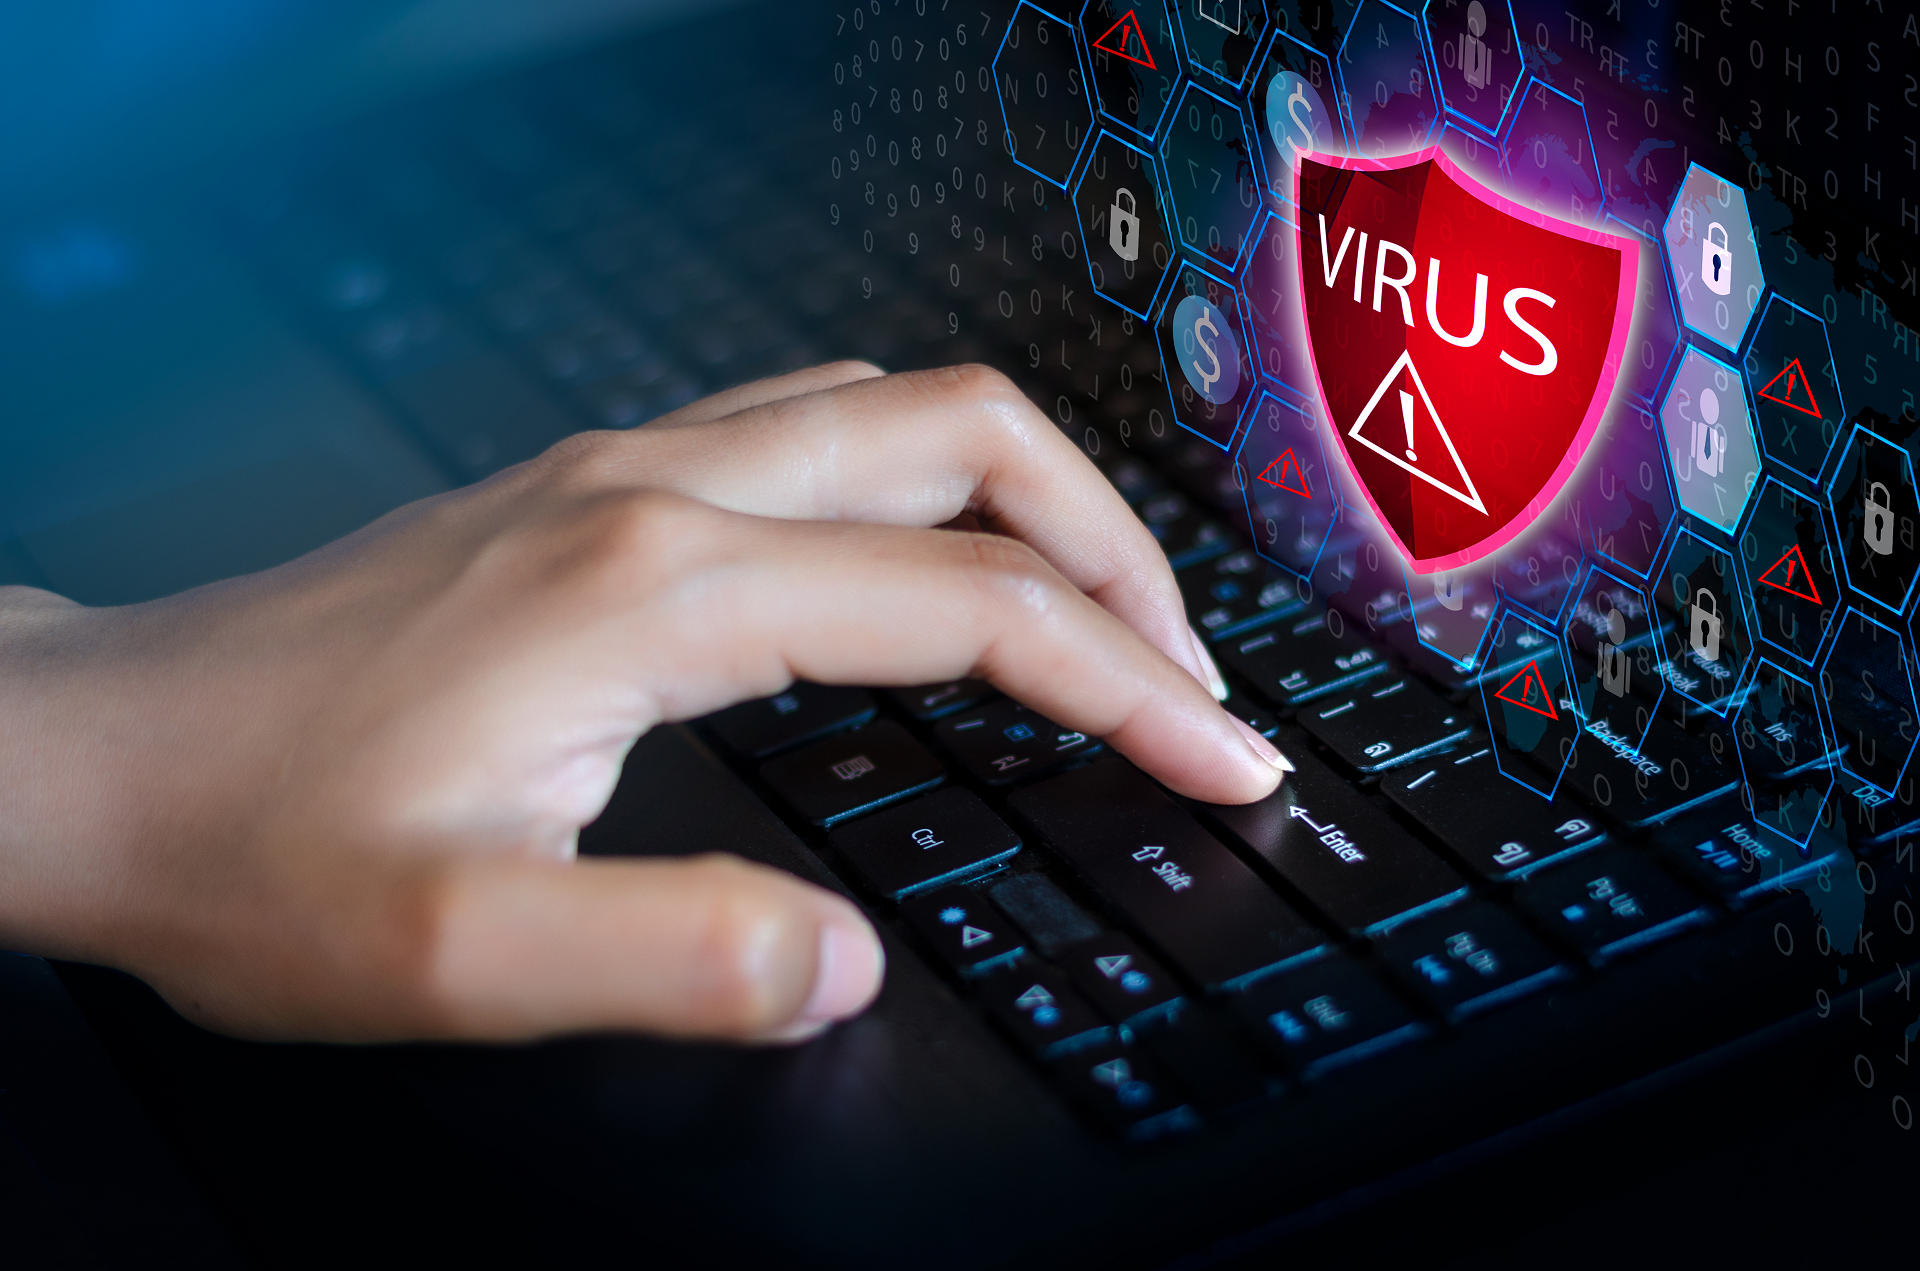 Wirus w komputerze, jak usunąć wirusa z komputera?